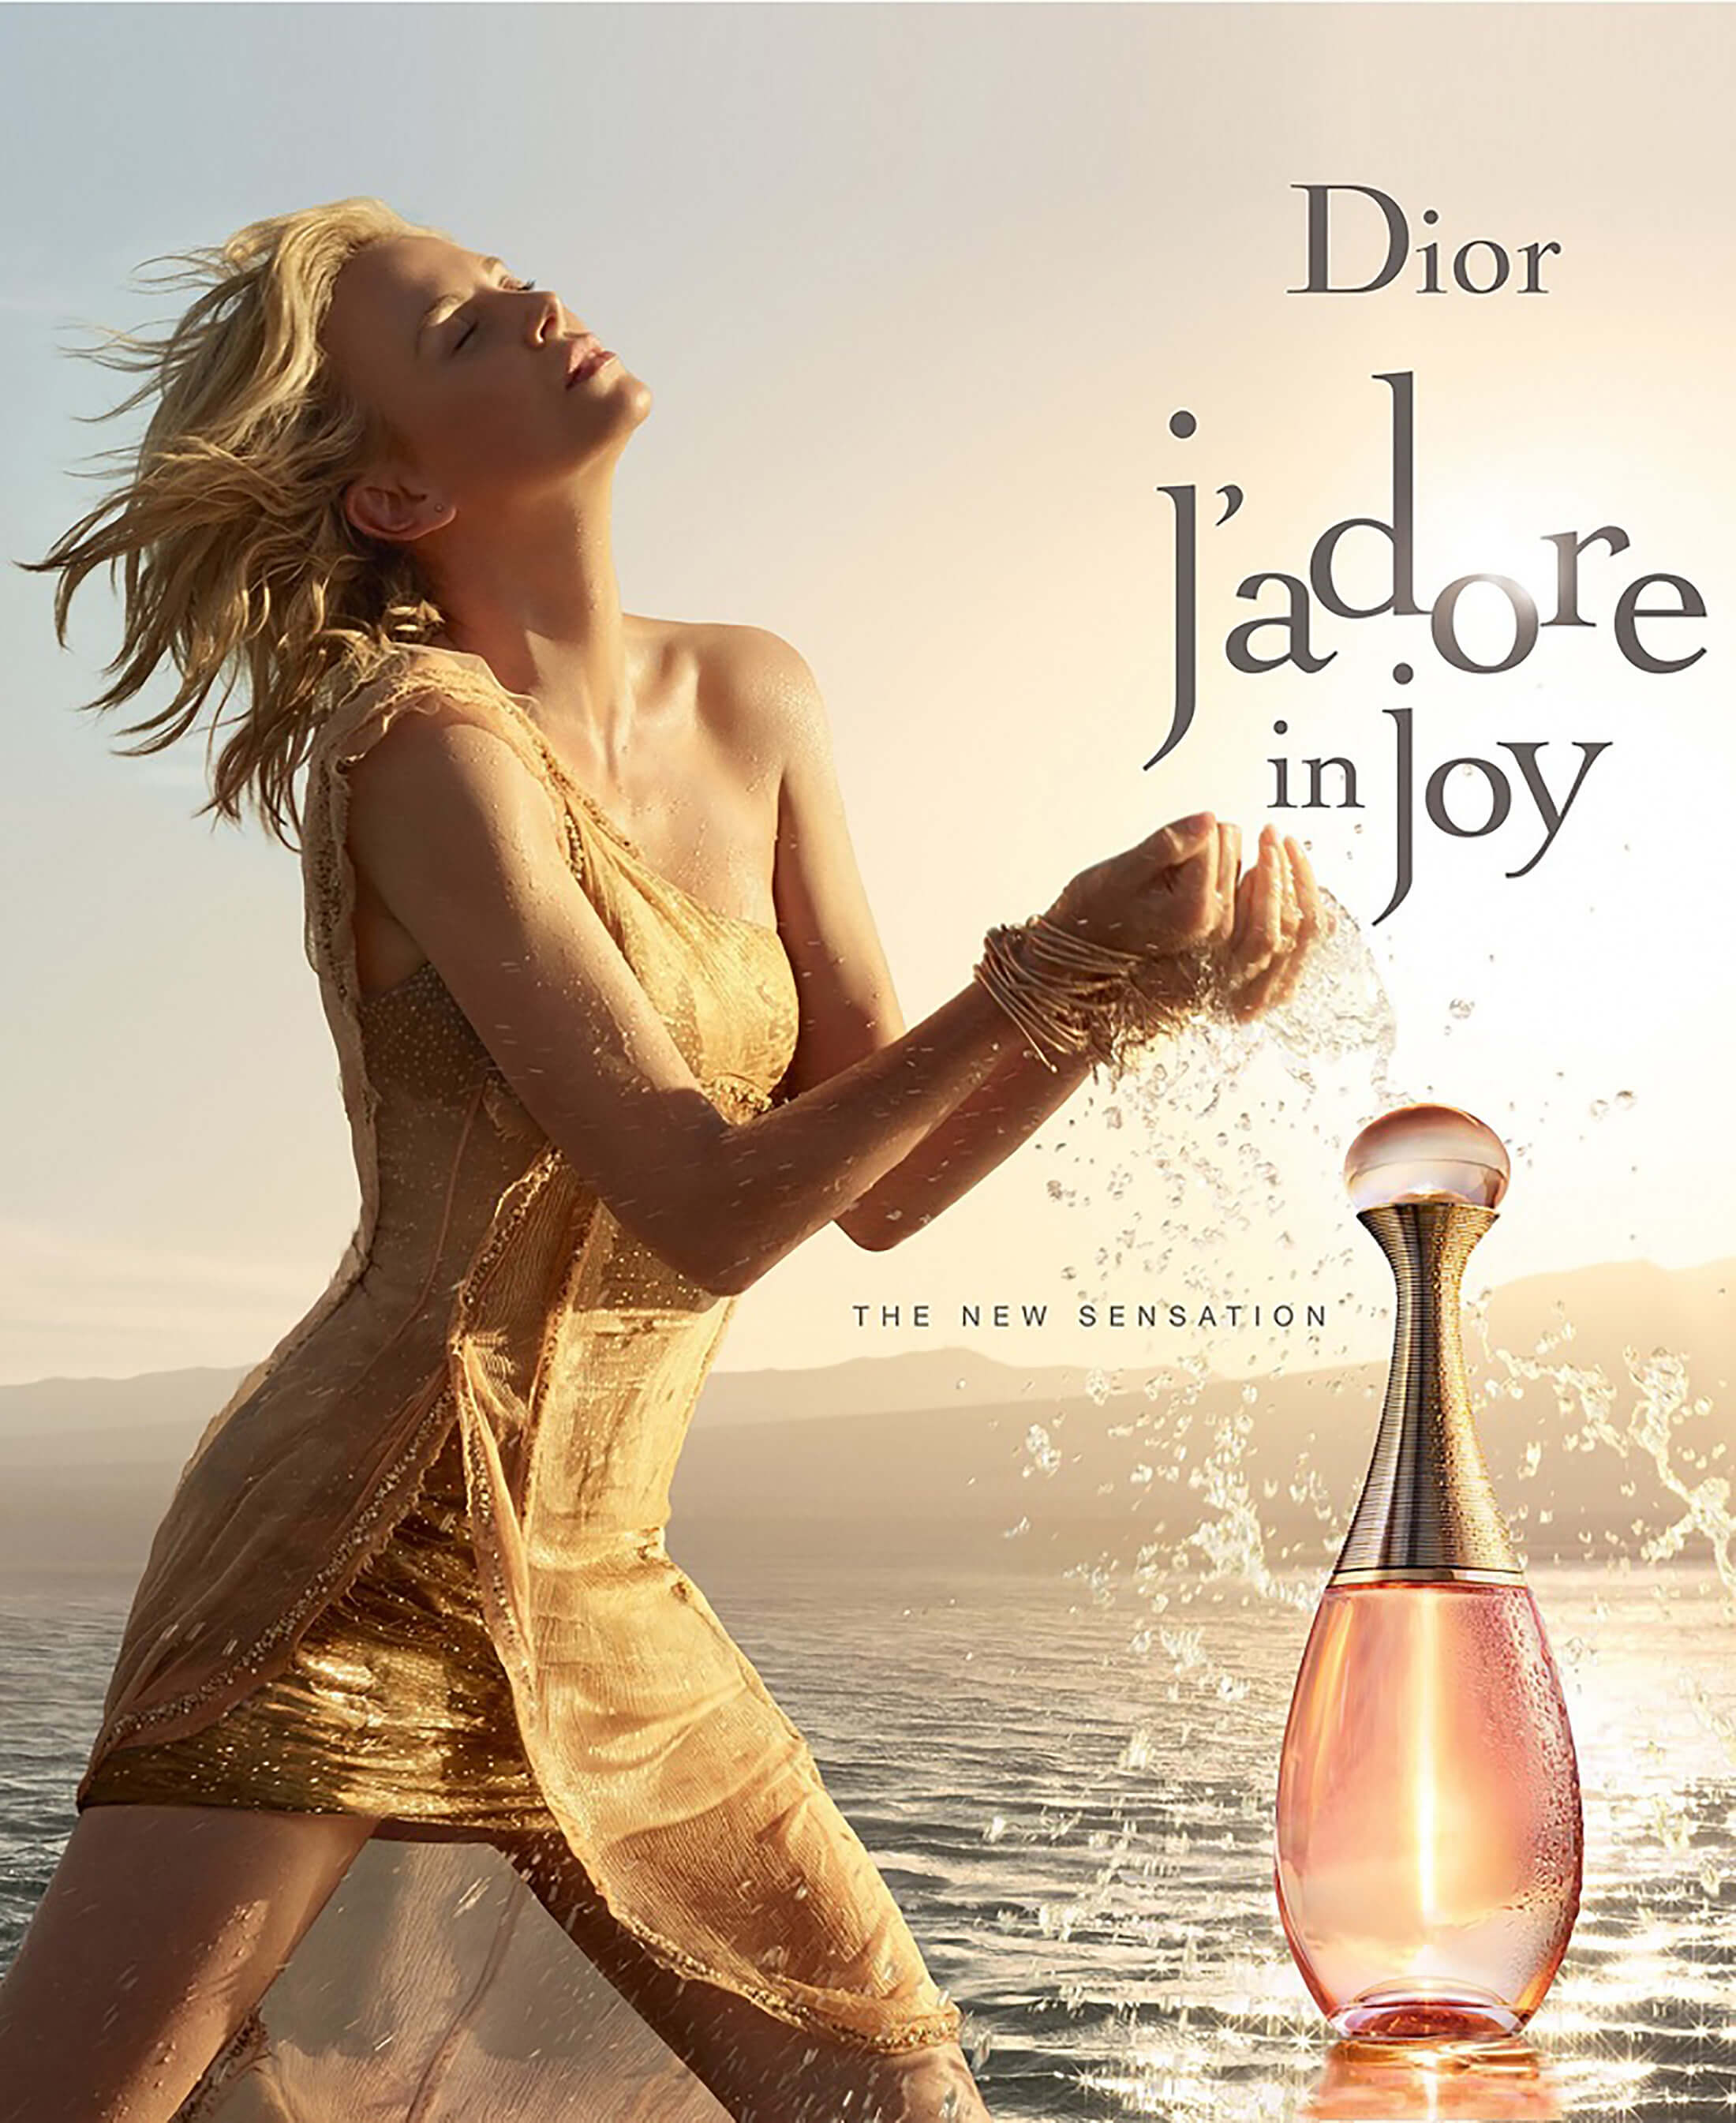 J'adore In Joy 5ml., Dior J'adore, Dior, น้ำหอม Dior ,ซื้อน้ำหอมให้แฟน, น้ำหอมราคาถูก, ซื้อน้ำหอม